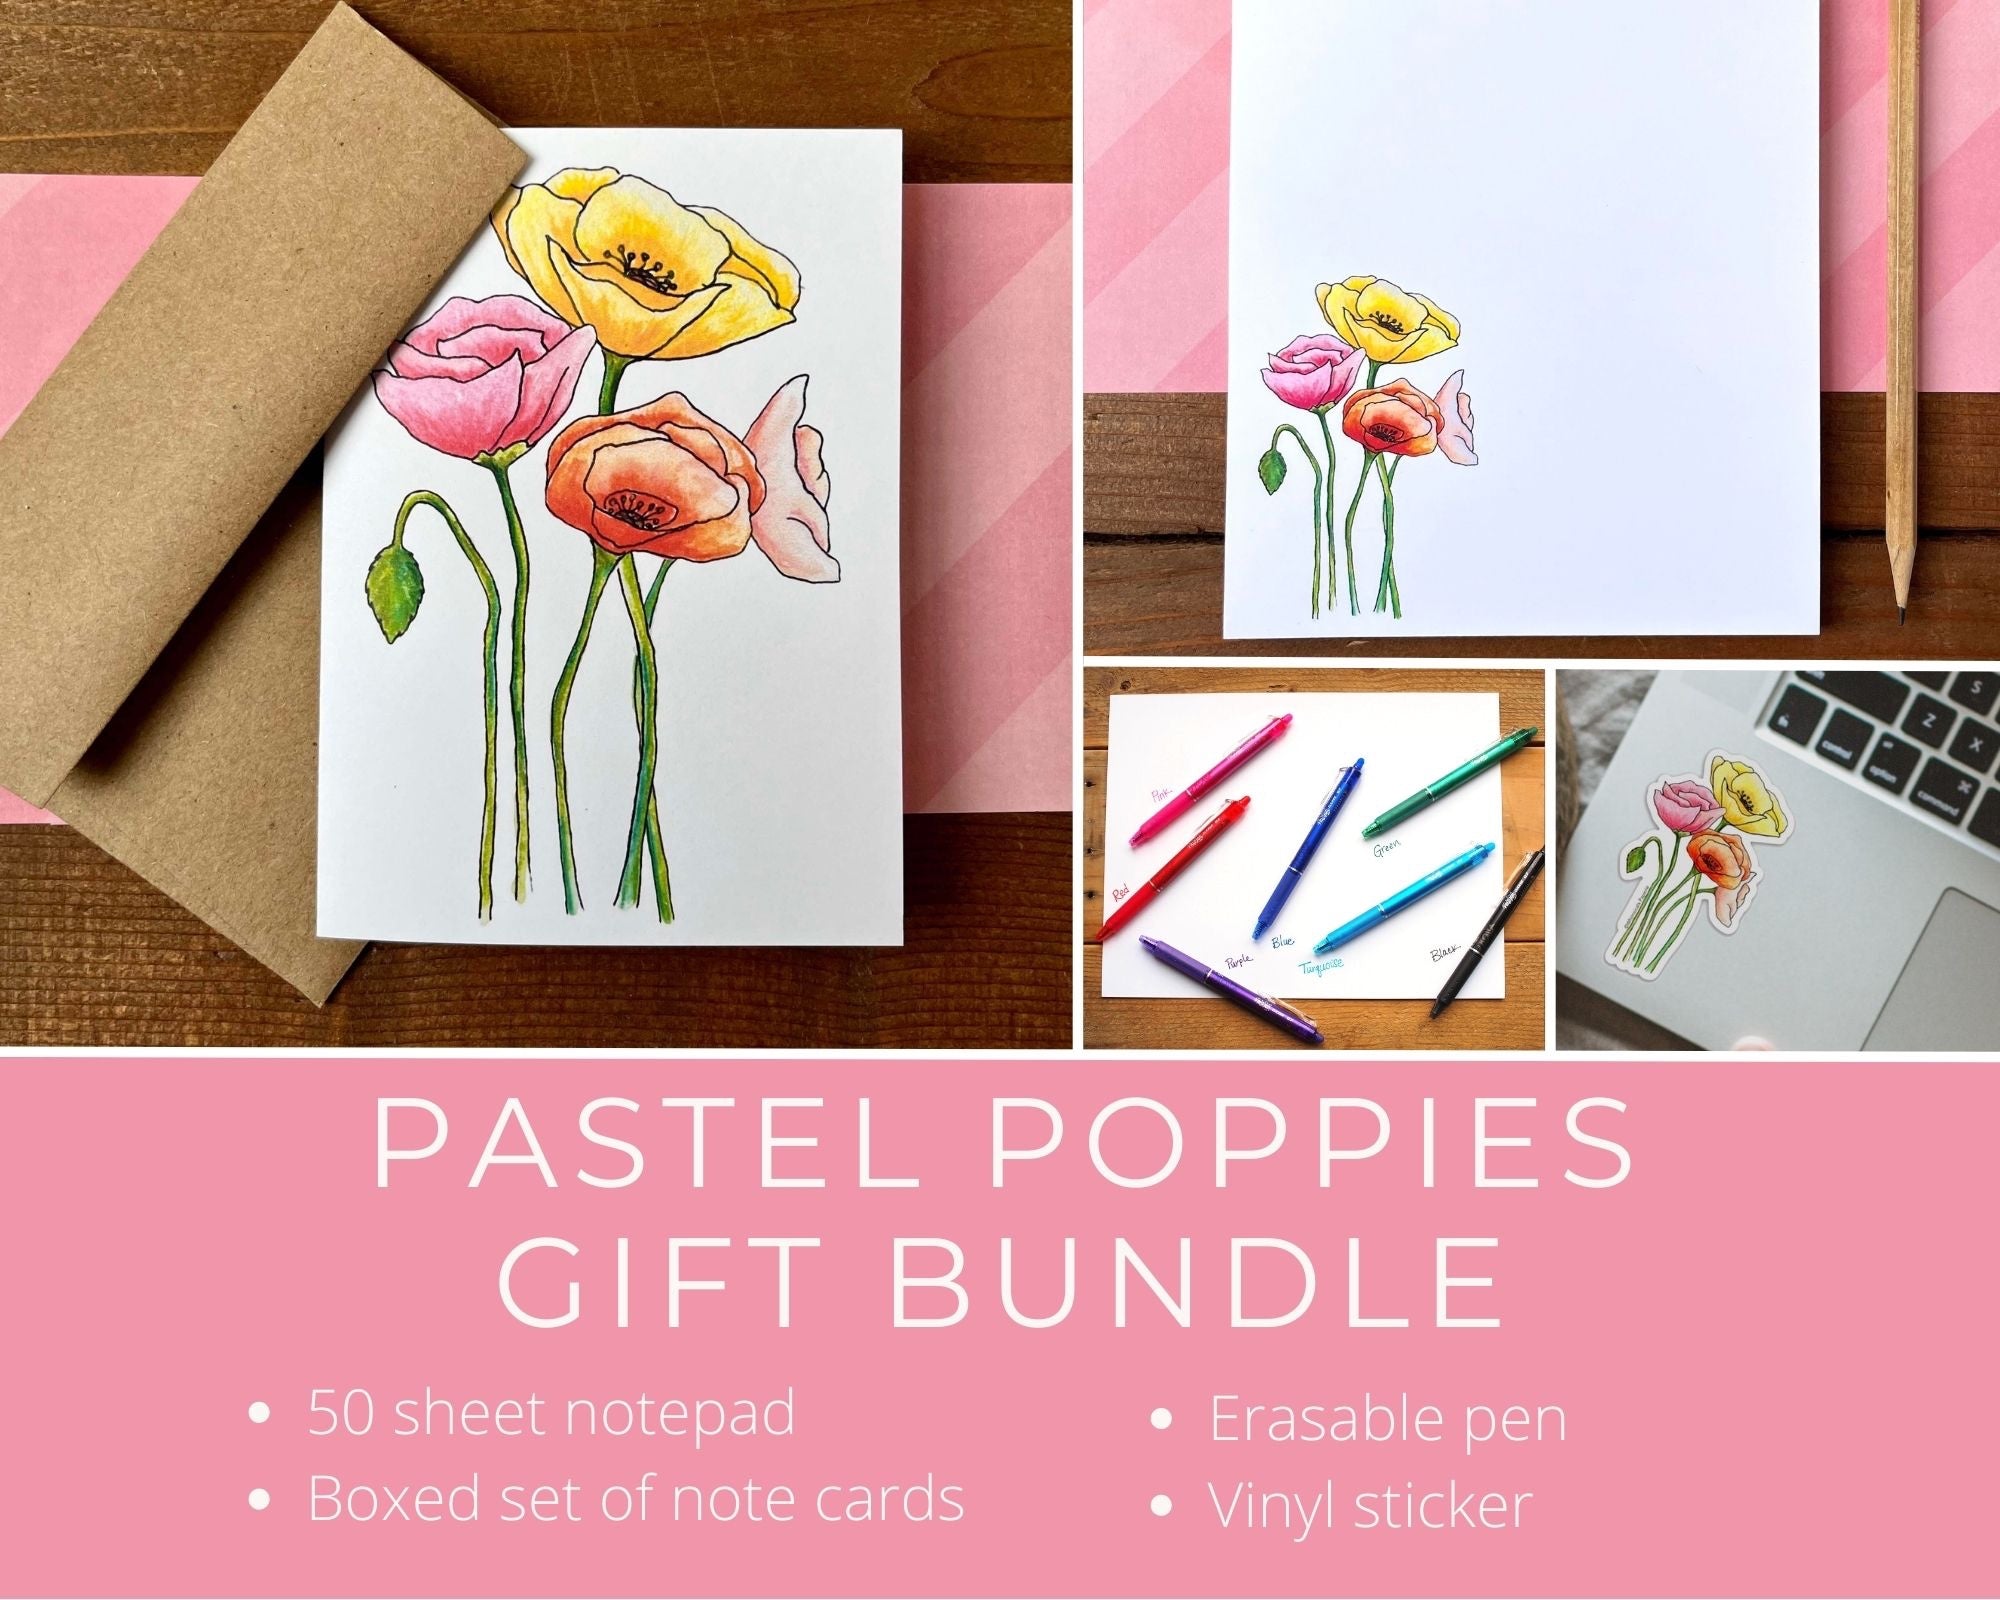 Pastel Poppies Stationery Set Gift Bundle